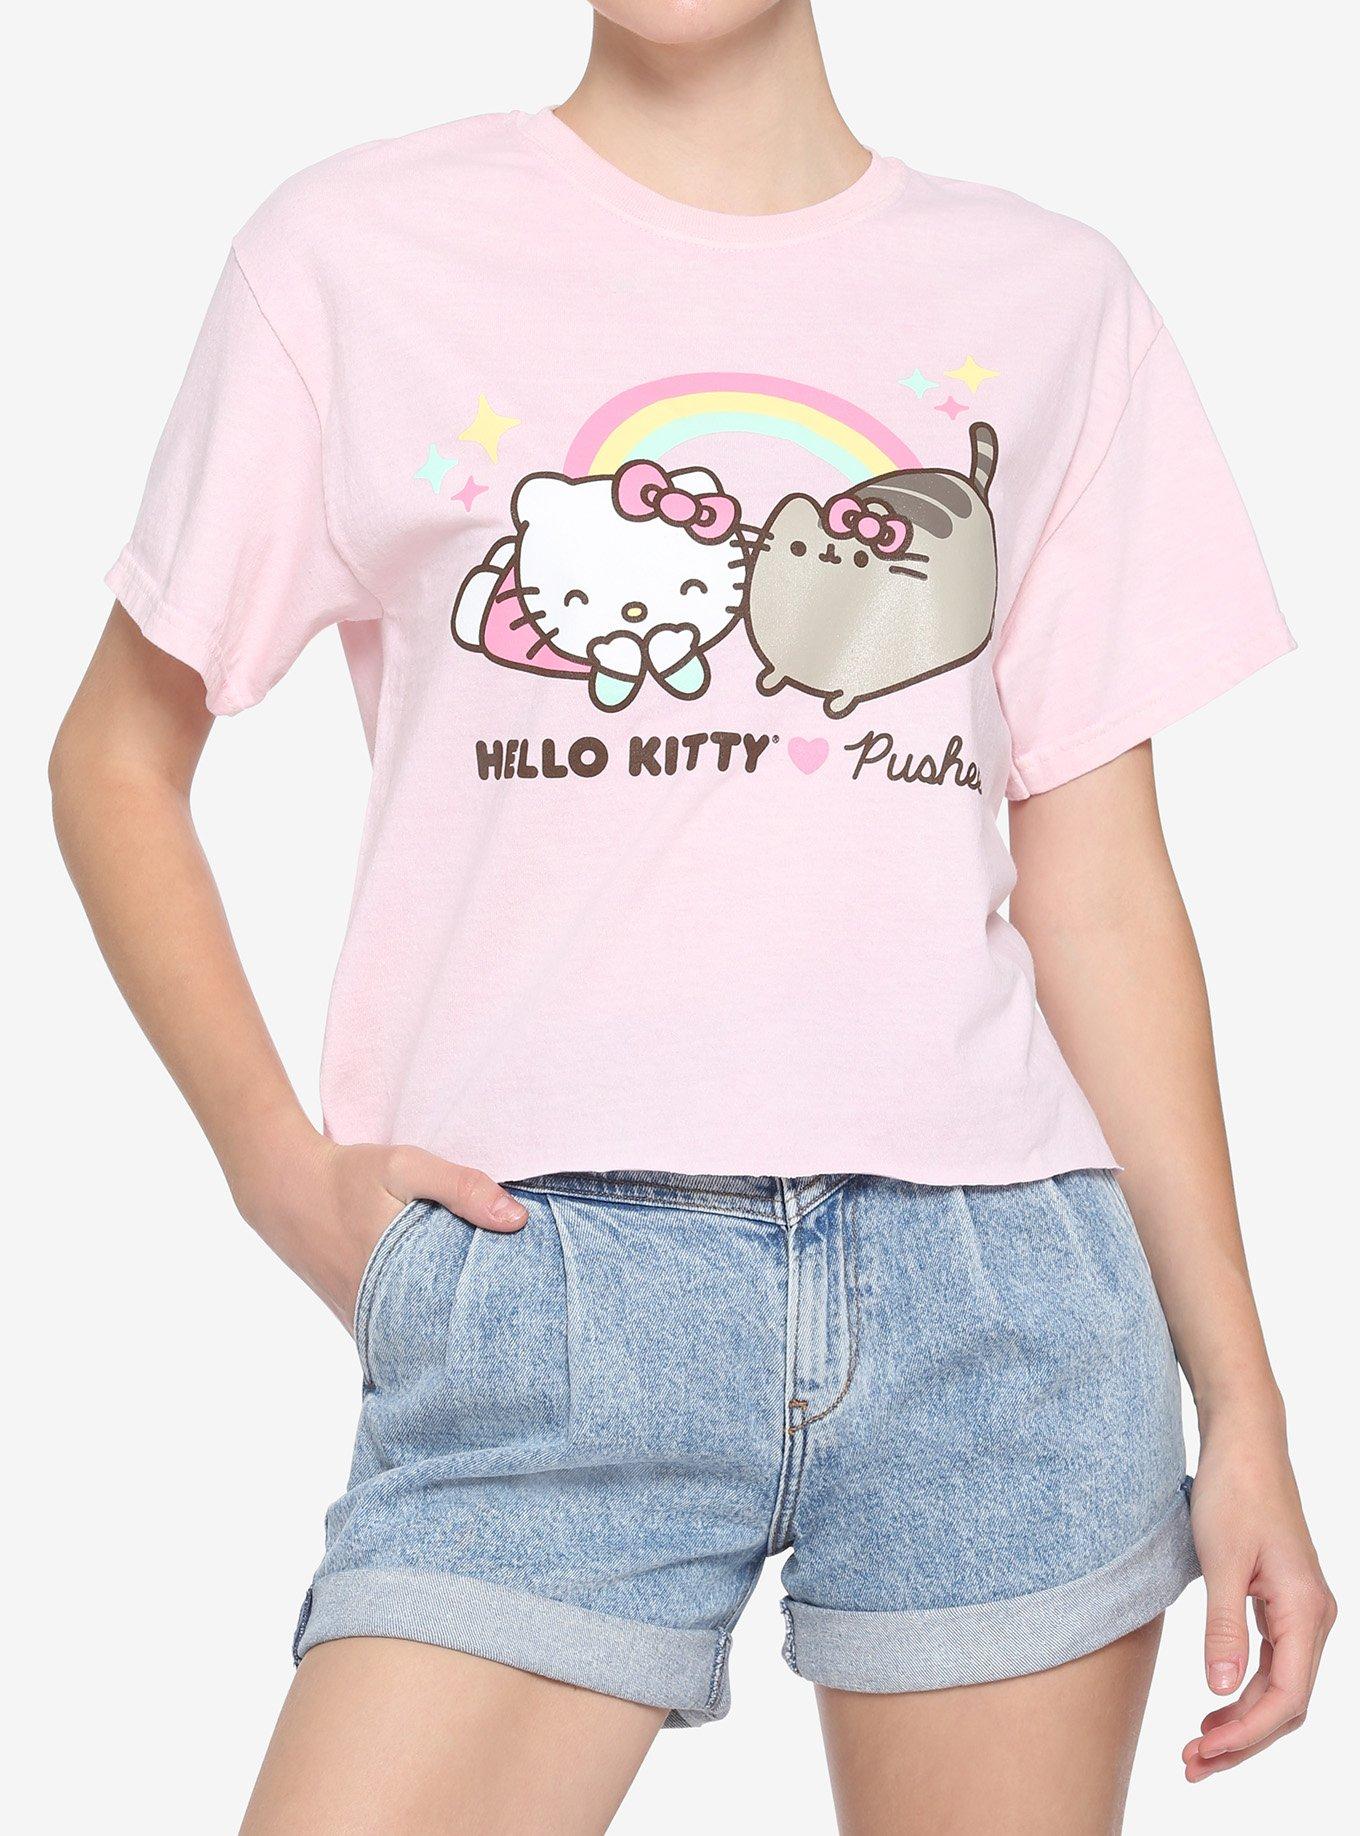 hot topic hello kitty shirt